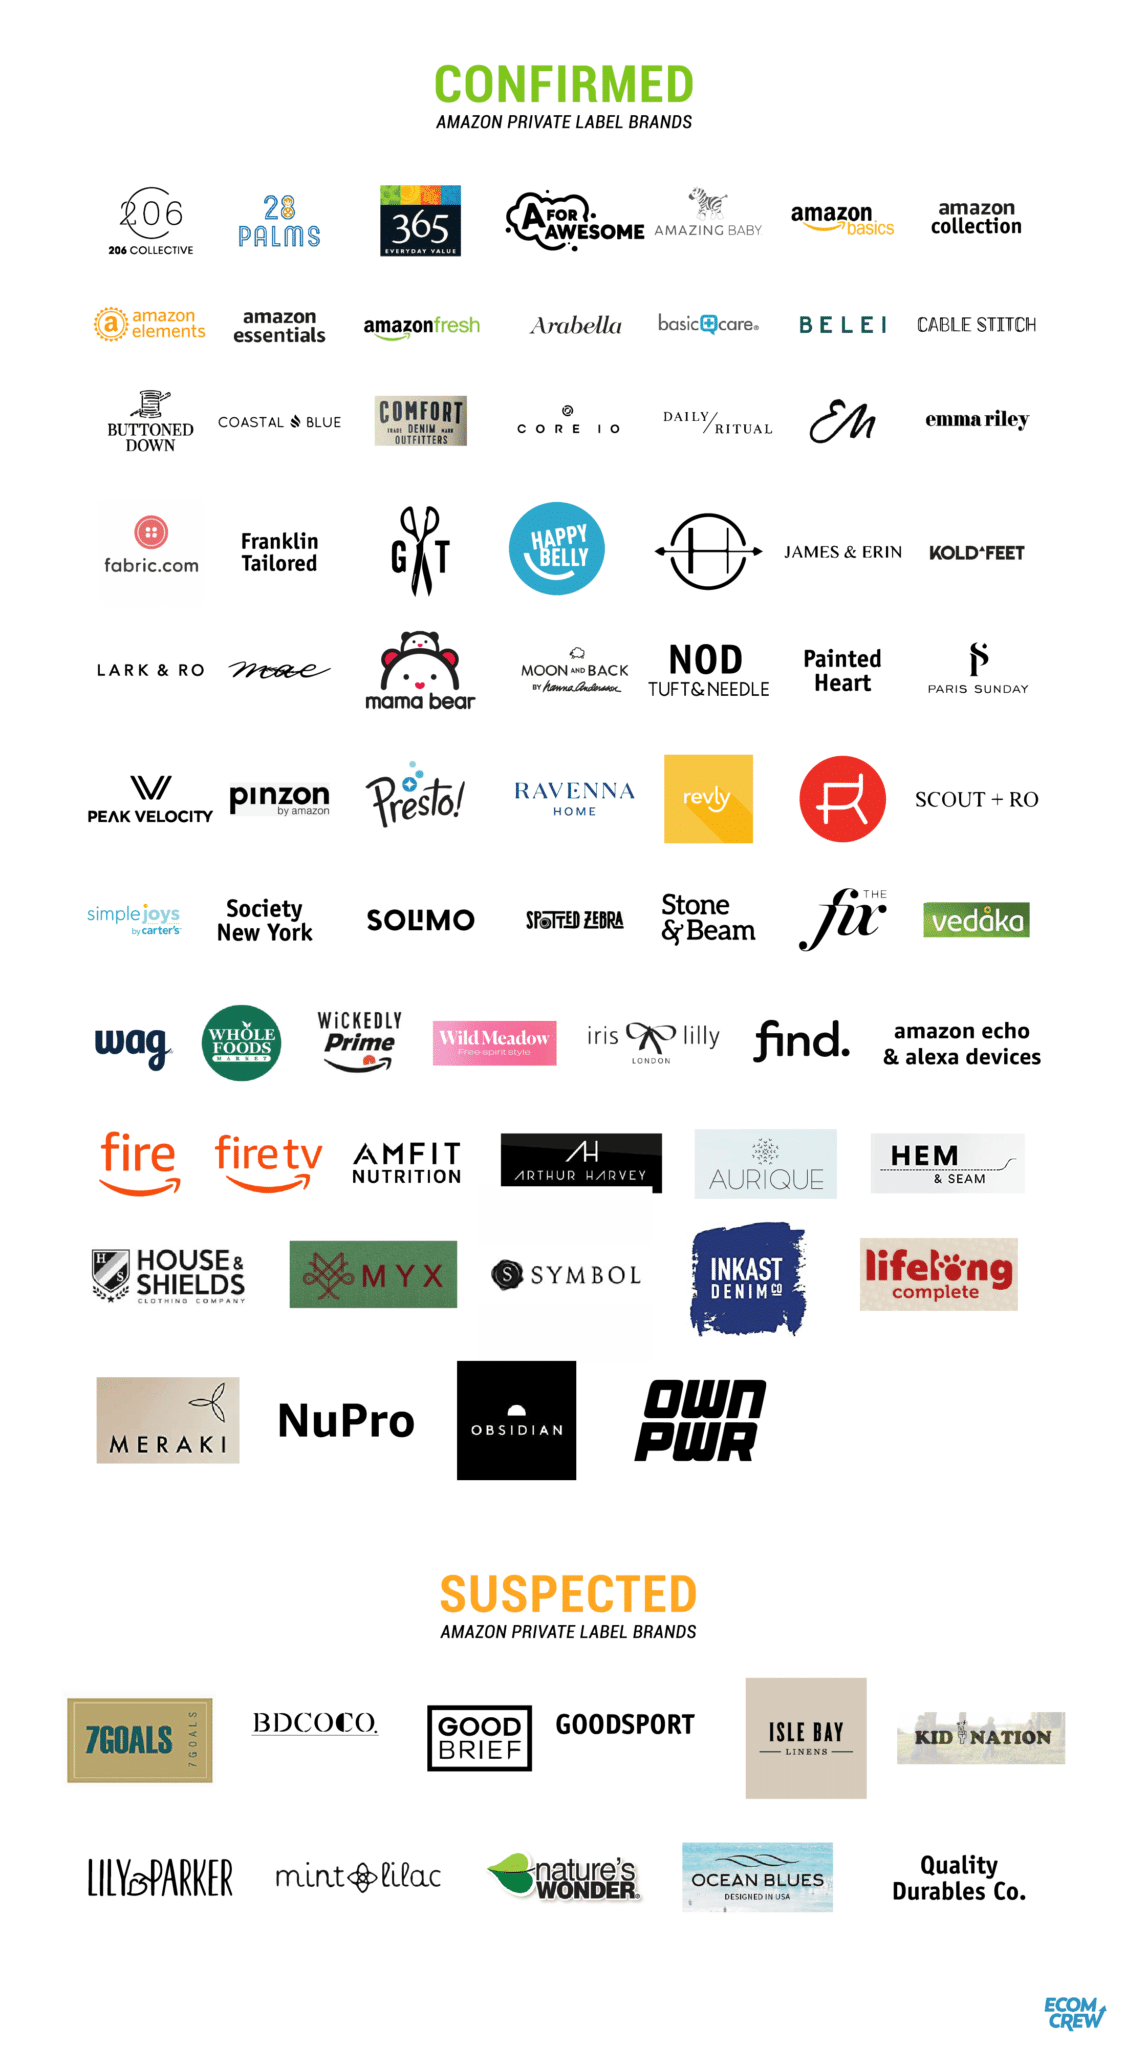 In-Depth Study of All 92 Amazon Private Label Brands